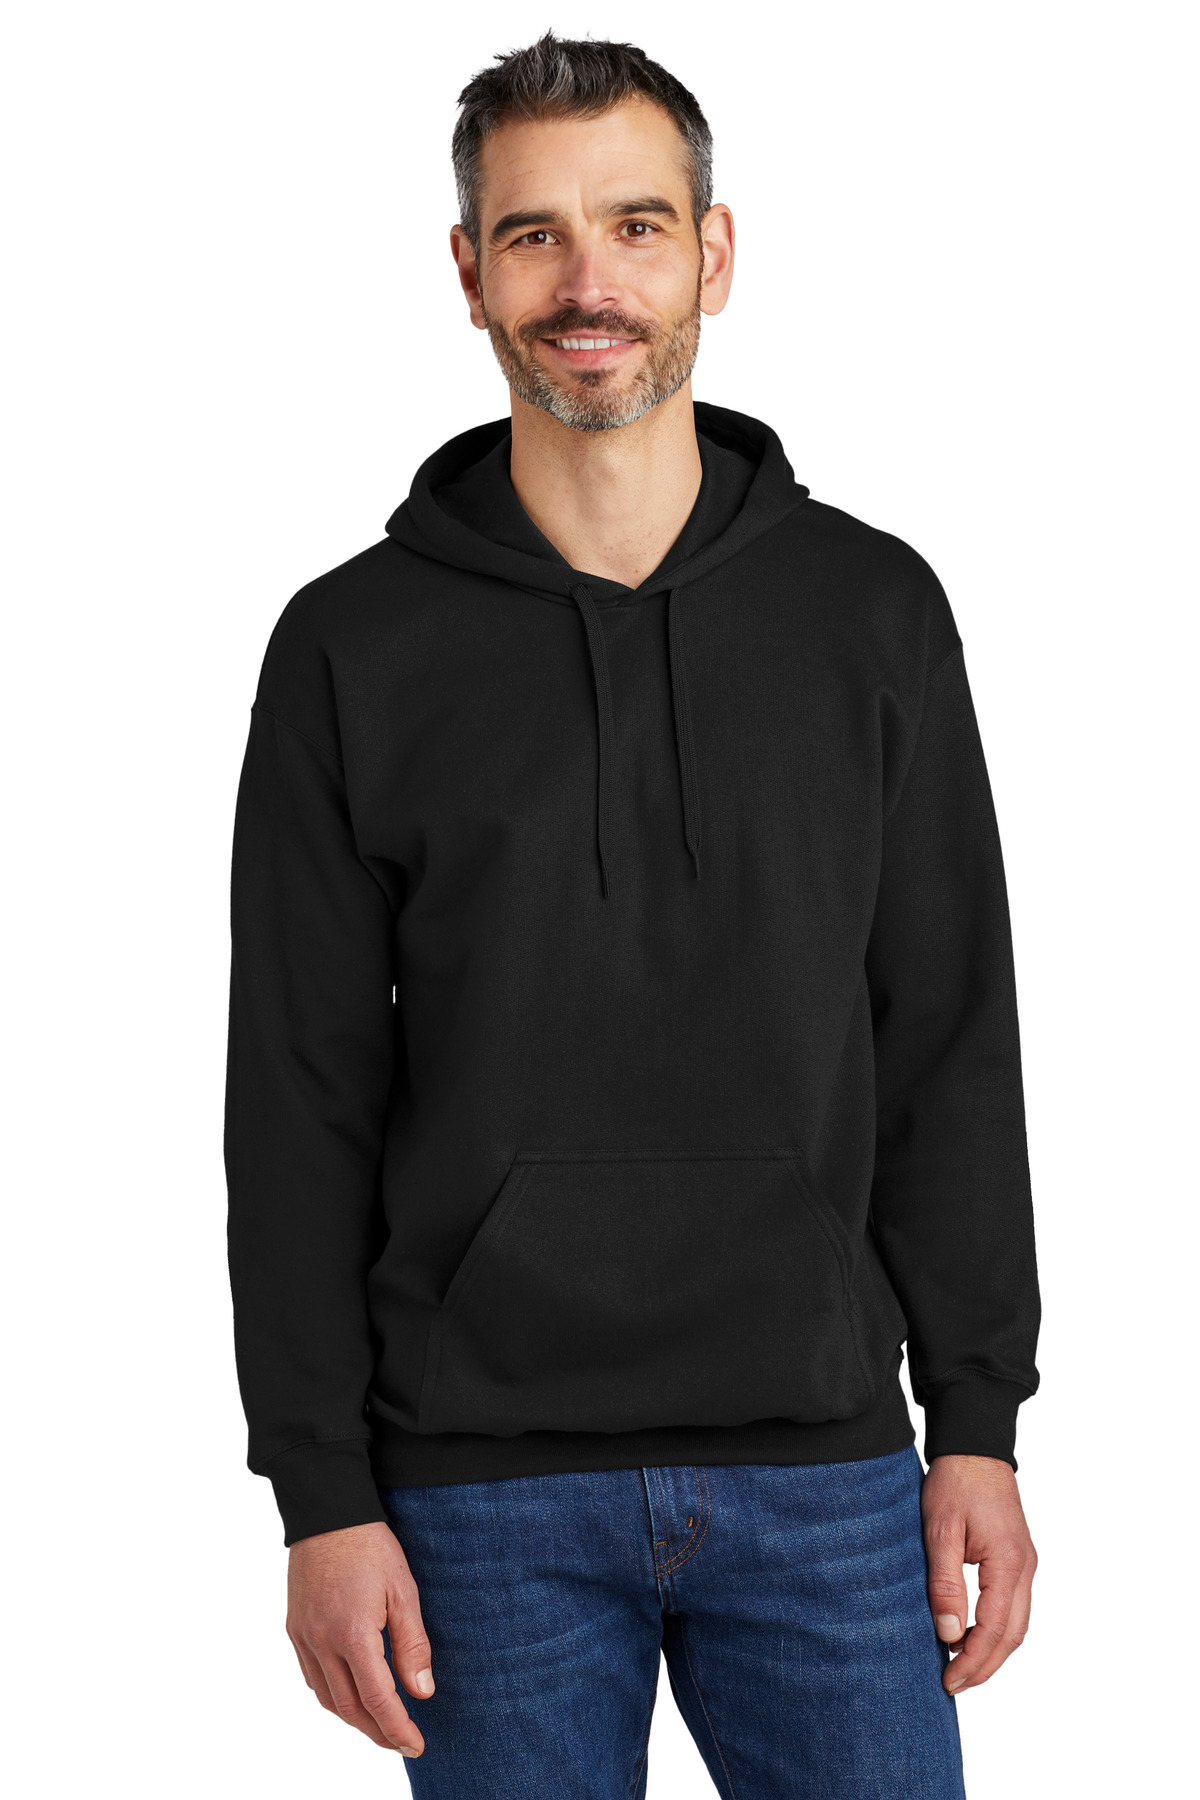 Buy Gildan Softstyle Pullover Hooded Sweatshirt - Gildan Online at Best ...